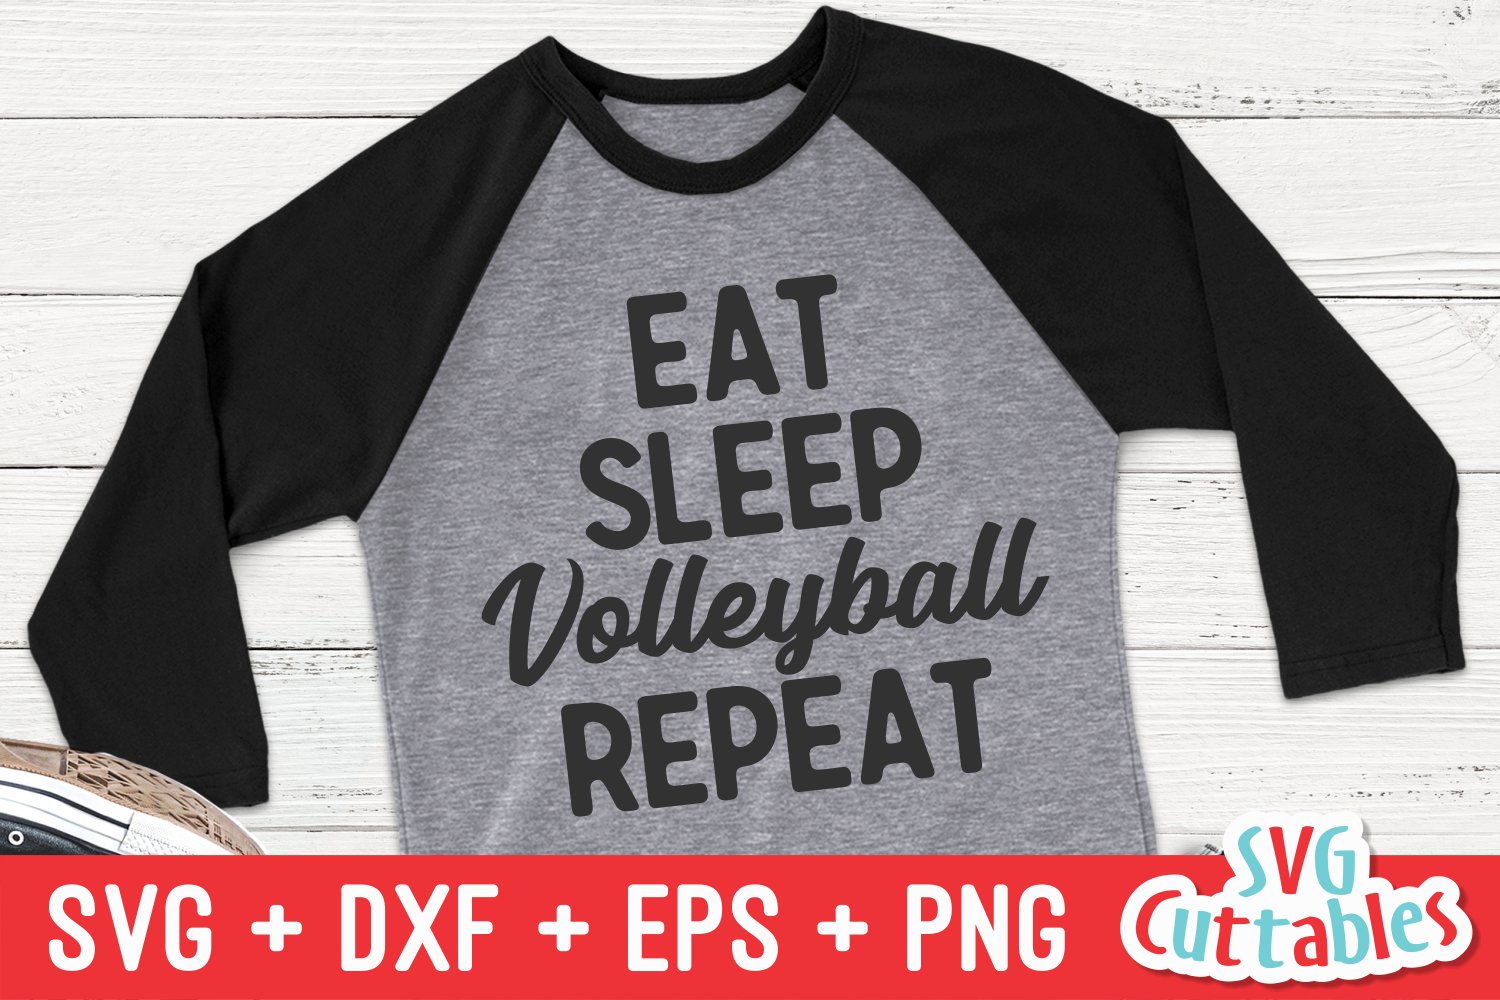 Eat Sleep Volleyball Repeat - t-shirt design.